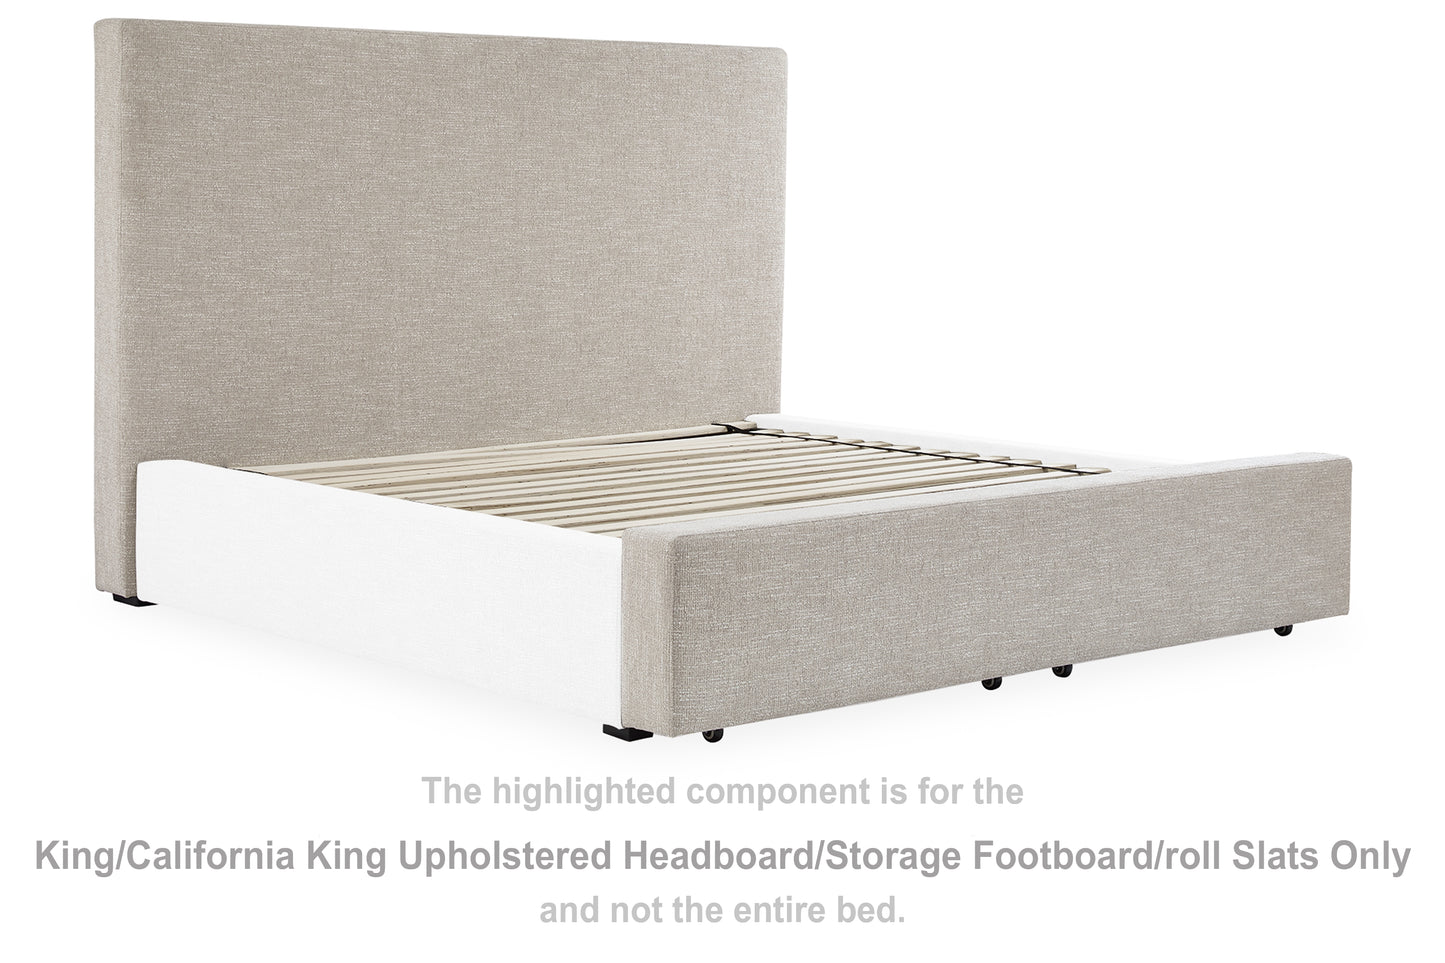 Kristiland King/California King Upholstered Headboard/Storage Footboard/roll Slats